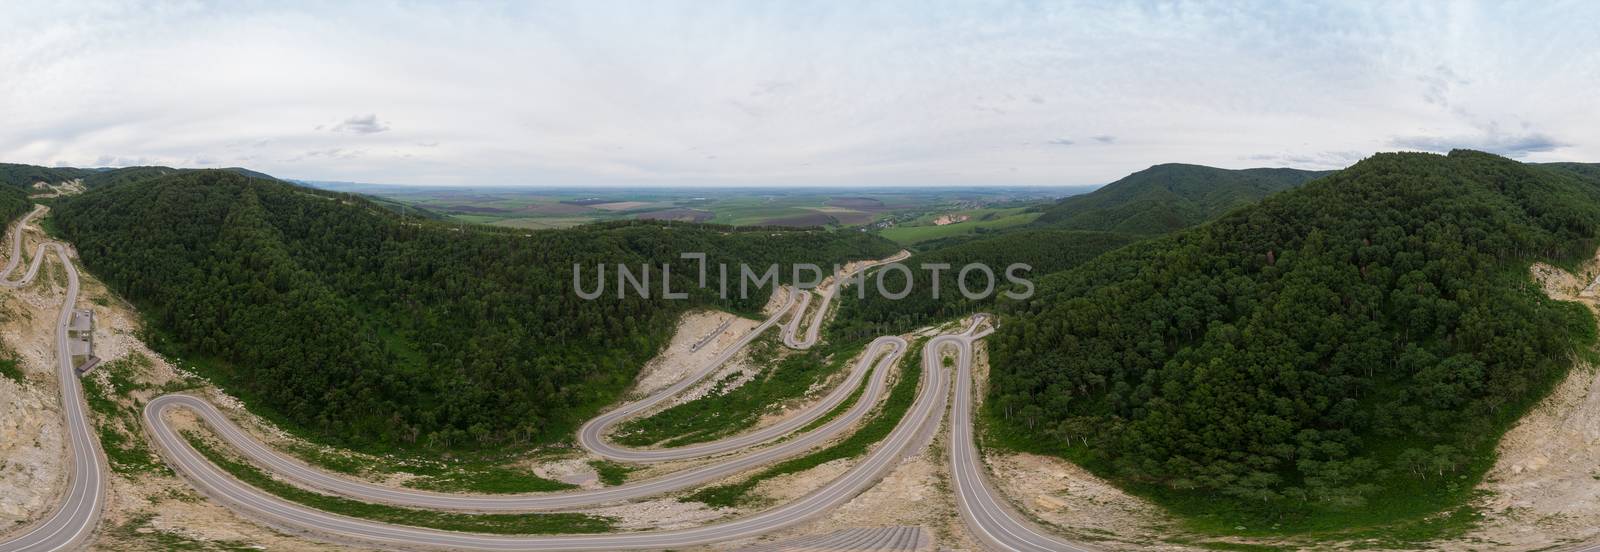 Full 360 equirectangular spherical panorama of aerial top vew of winding road in the mountains, drone shot. Altai Krai, Western Siberia, Russia. Road to Resort town Belokurikha 2. Virtual reality content